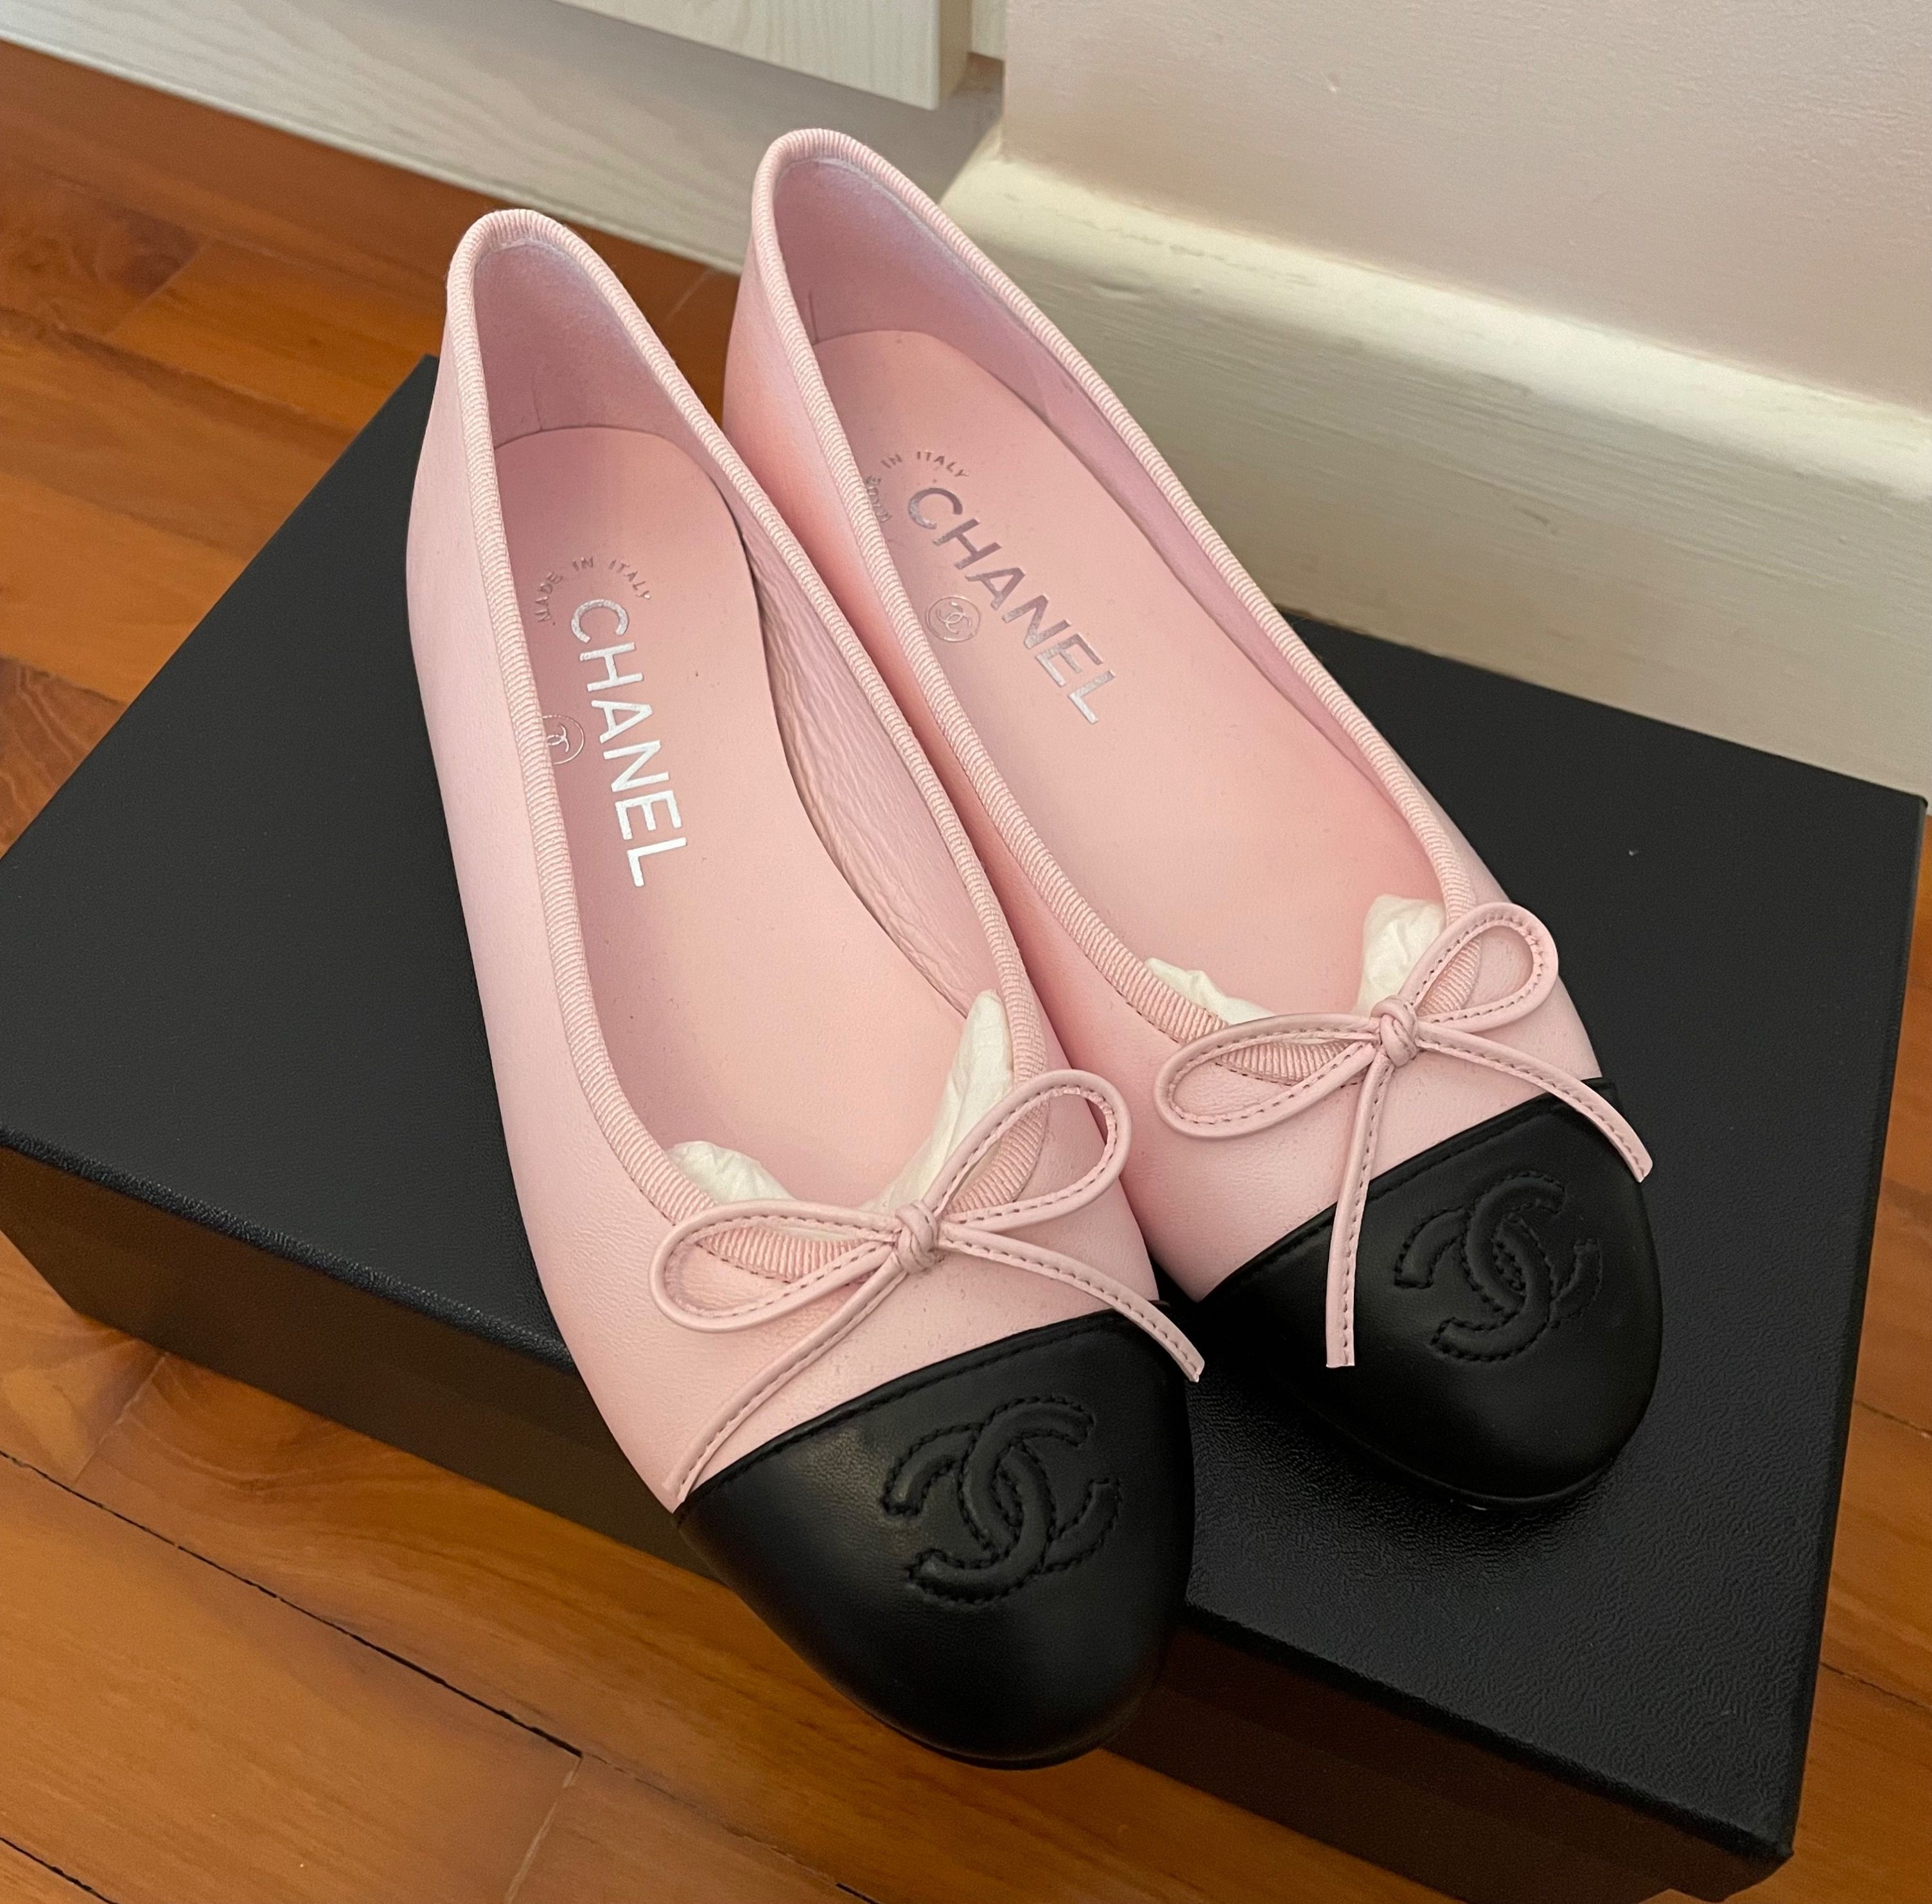 BELOW RETAIL) Chanel Pink Ballerina Shoes Size 35C (not 23K